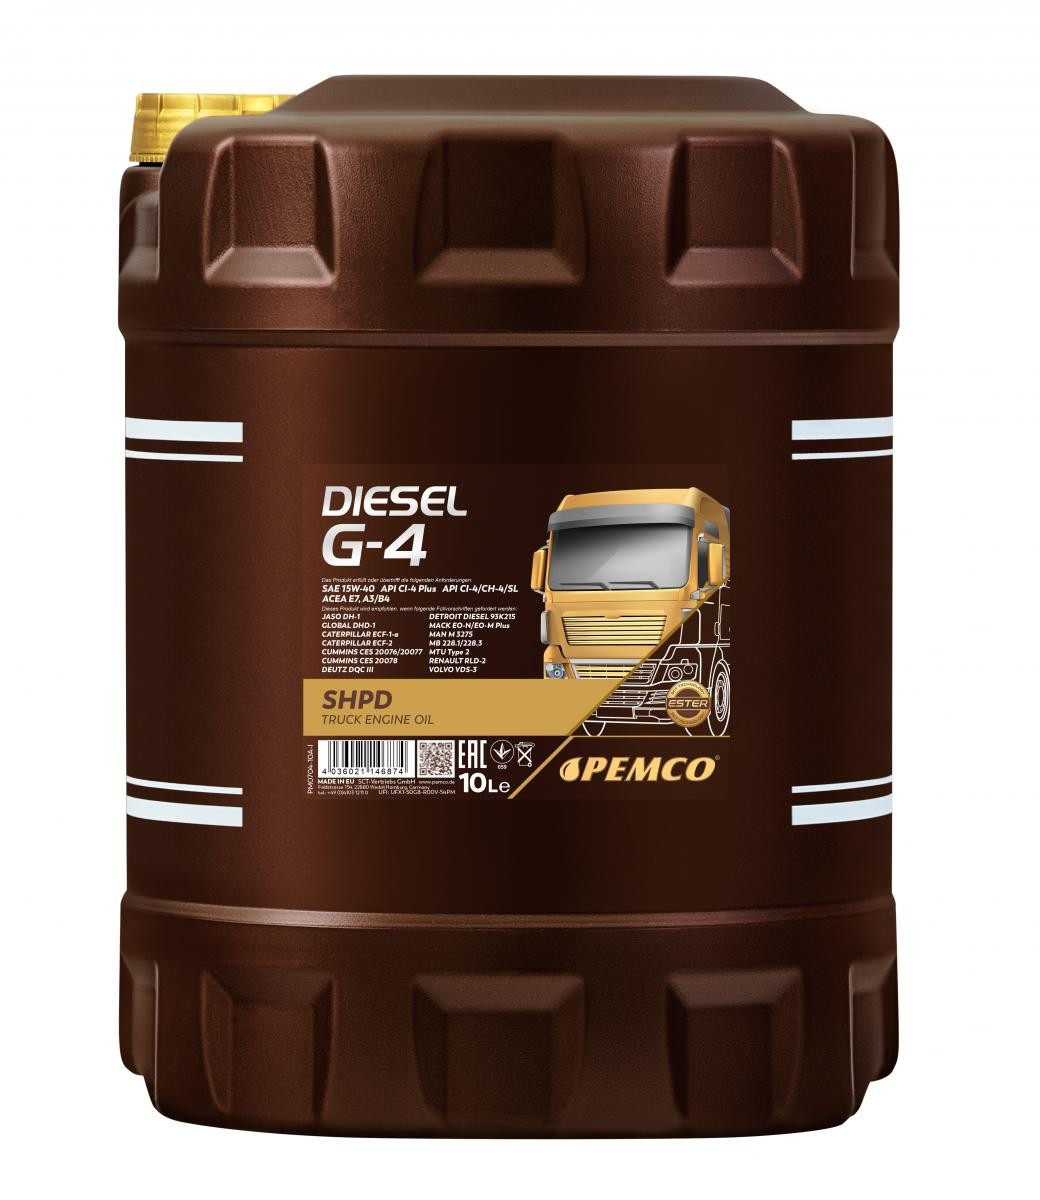 Kaufen Sie Motoröl PEMCO PM0704-10 Truck SHPD, DIESEL G-4 SHPD 15W-40, 10l, Mineralöl